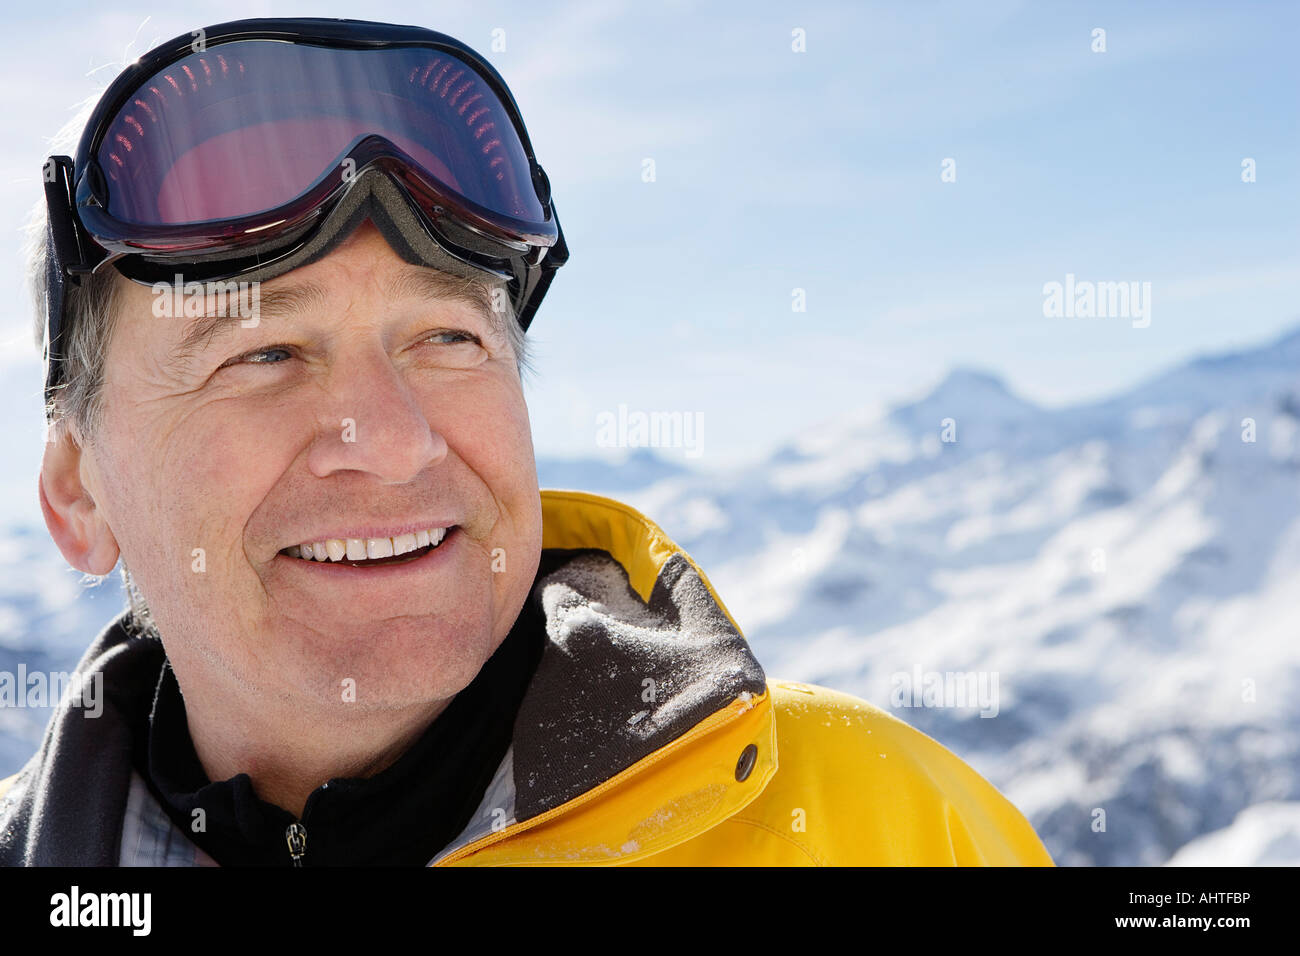 Mature male in ski-wear on mountain, close-up, portrait Stock Photo